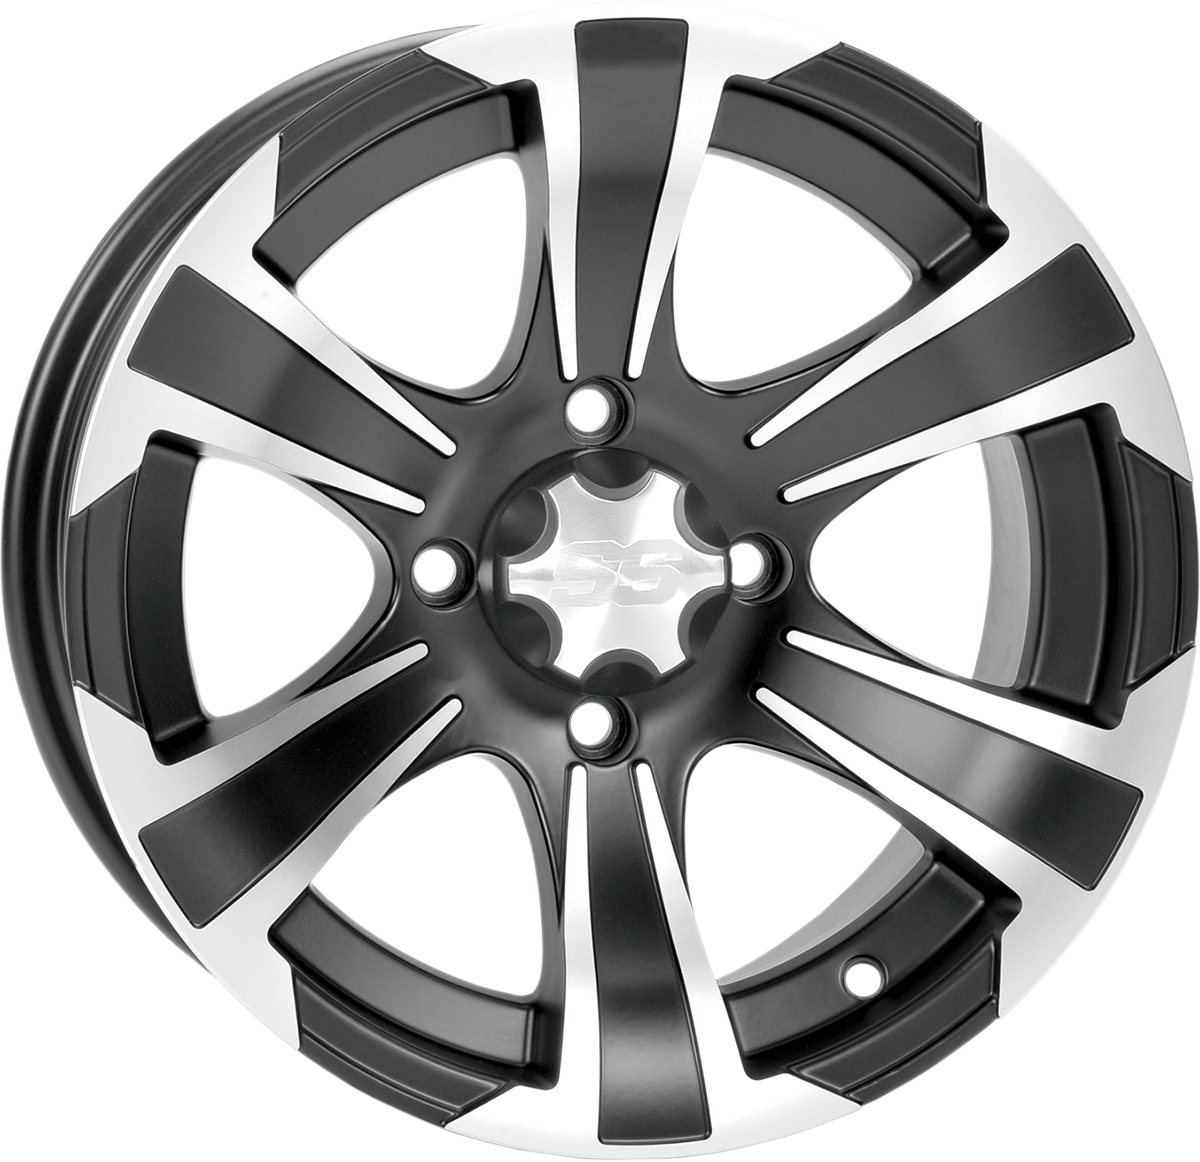 ITP SS312 Alloy Wheel - Rear - Black Machined - 14x8 - 4/110 - 5+3 1428447536B